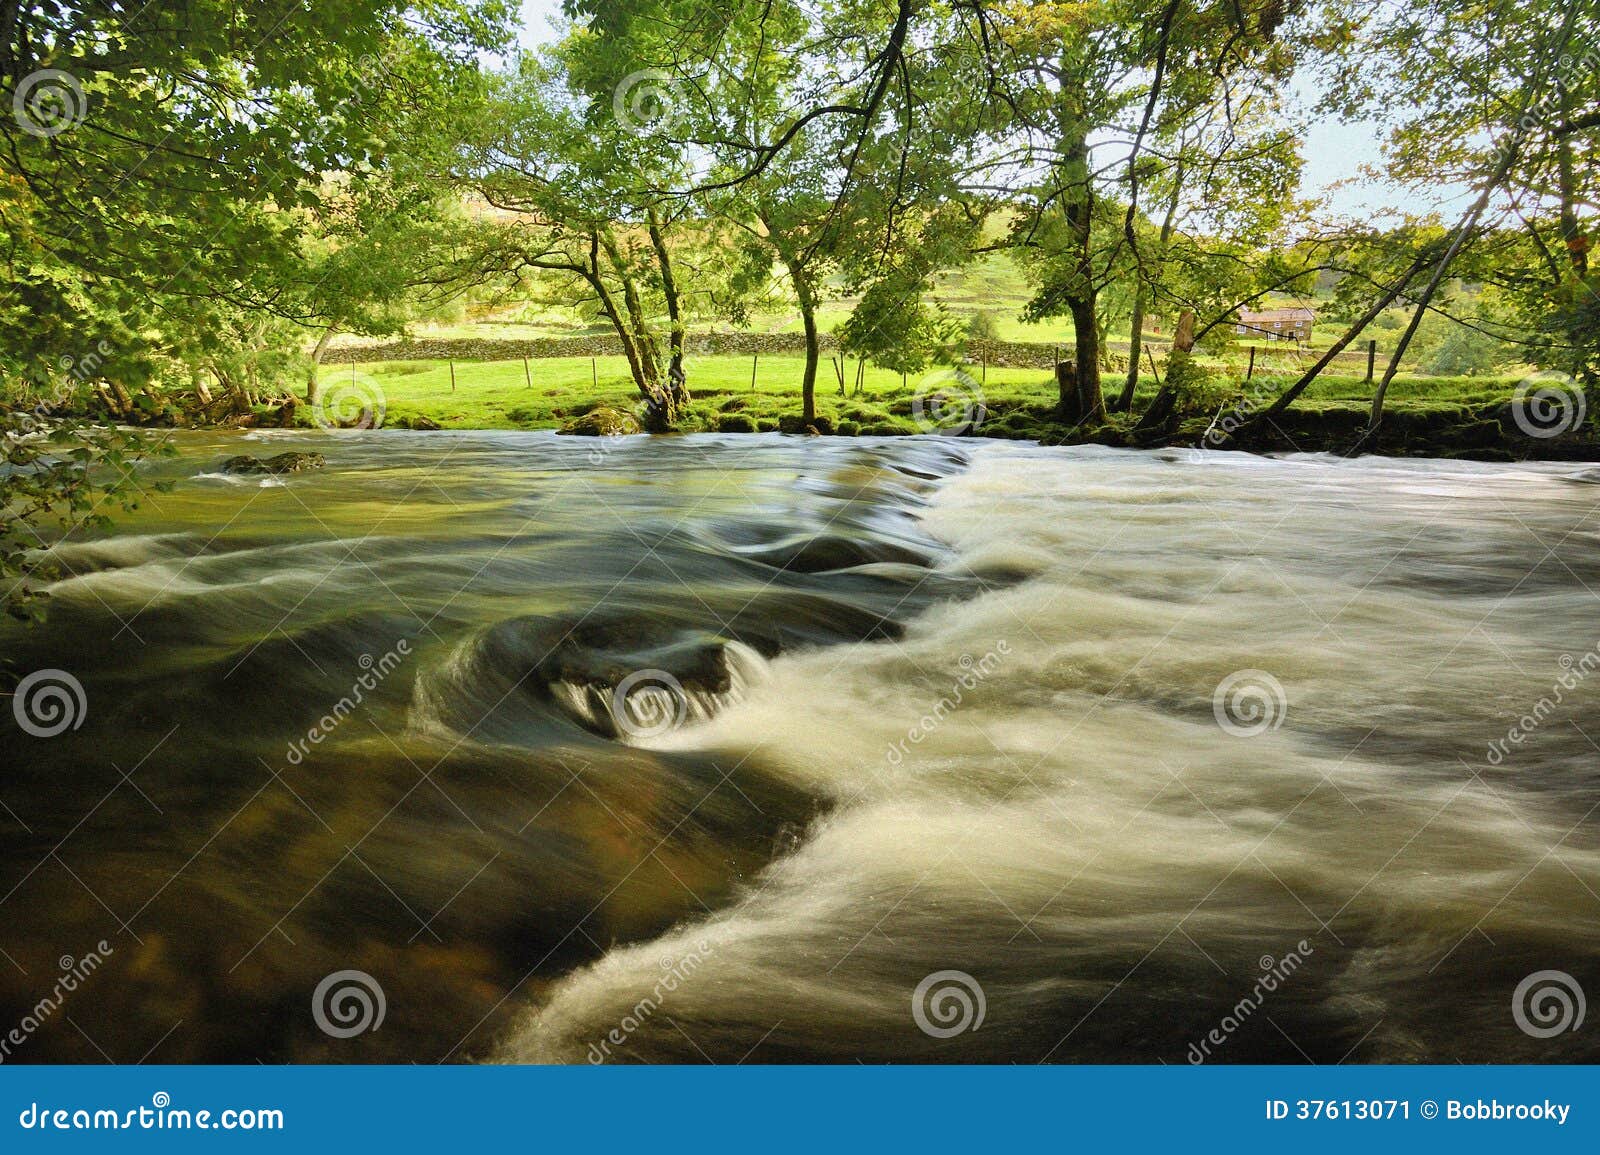 river duddon waters, cumbria